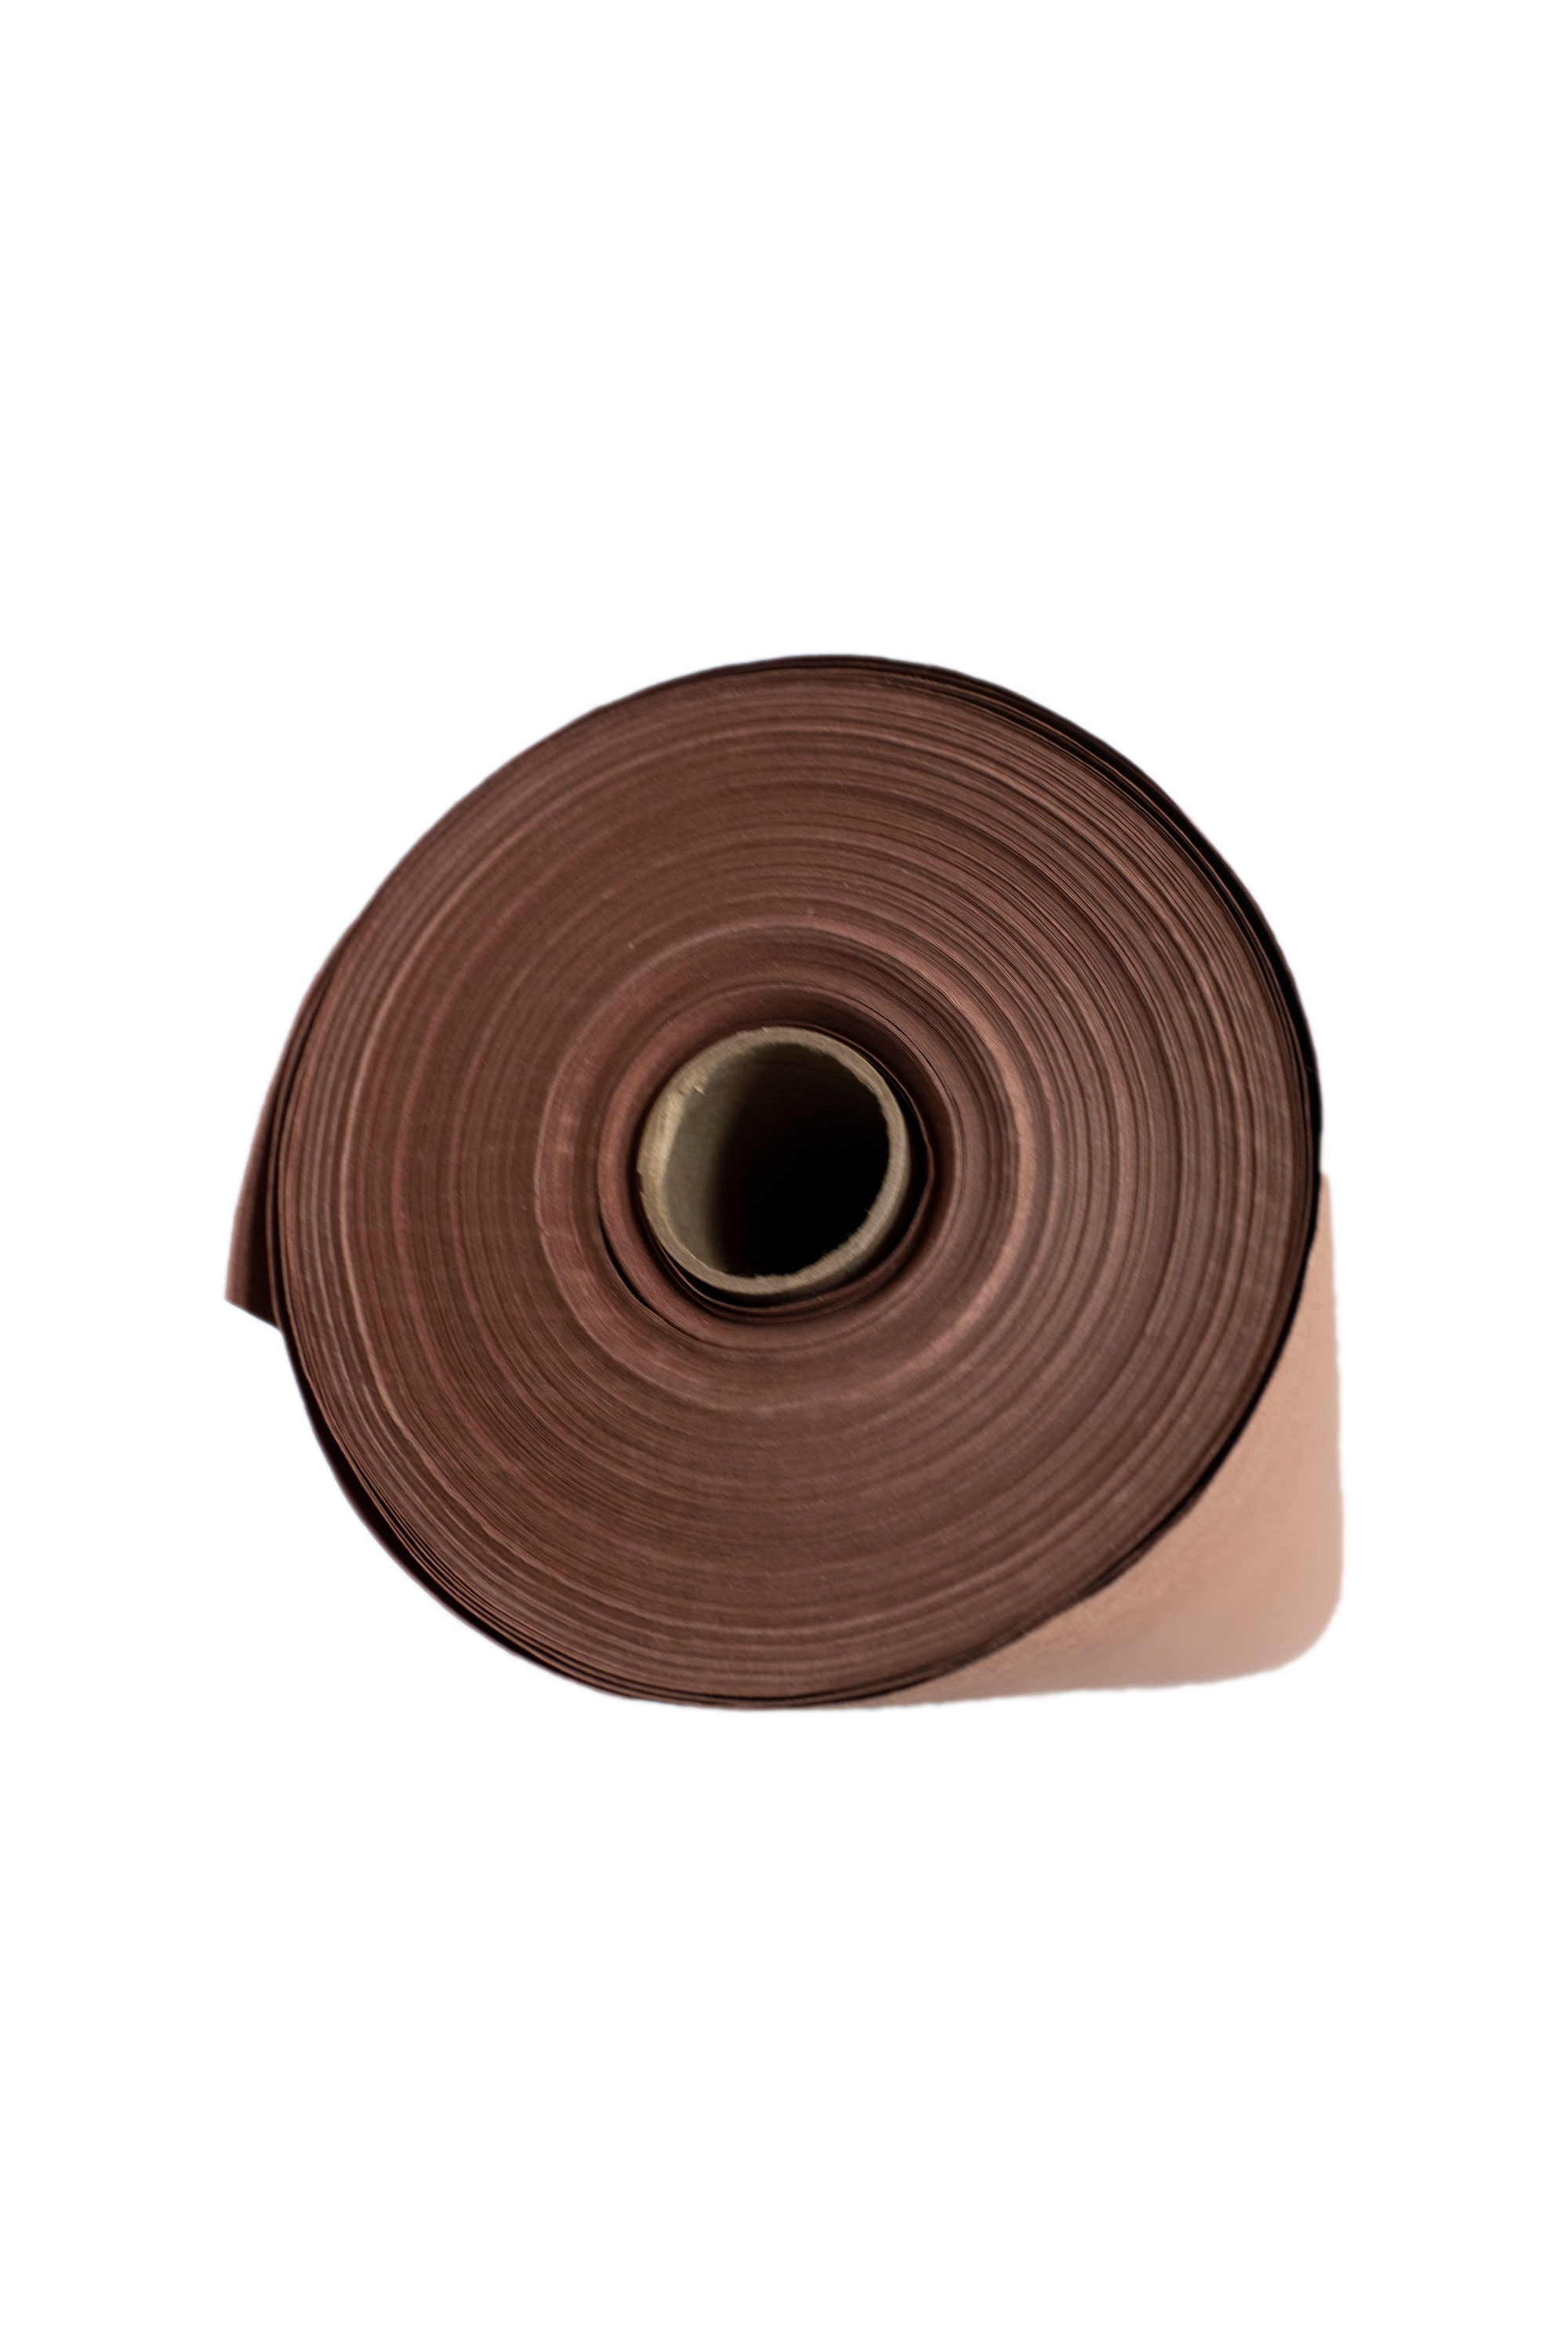 36 x 166' Brown Rosin Heavy-Duty 66# Contractor Painters Paper Roll buy in  stock in U.S. in IDL Packaging